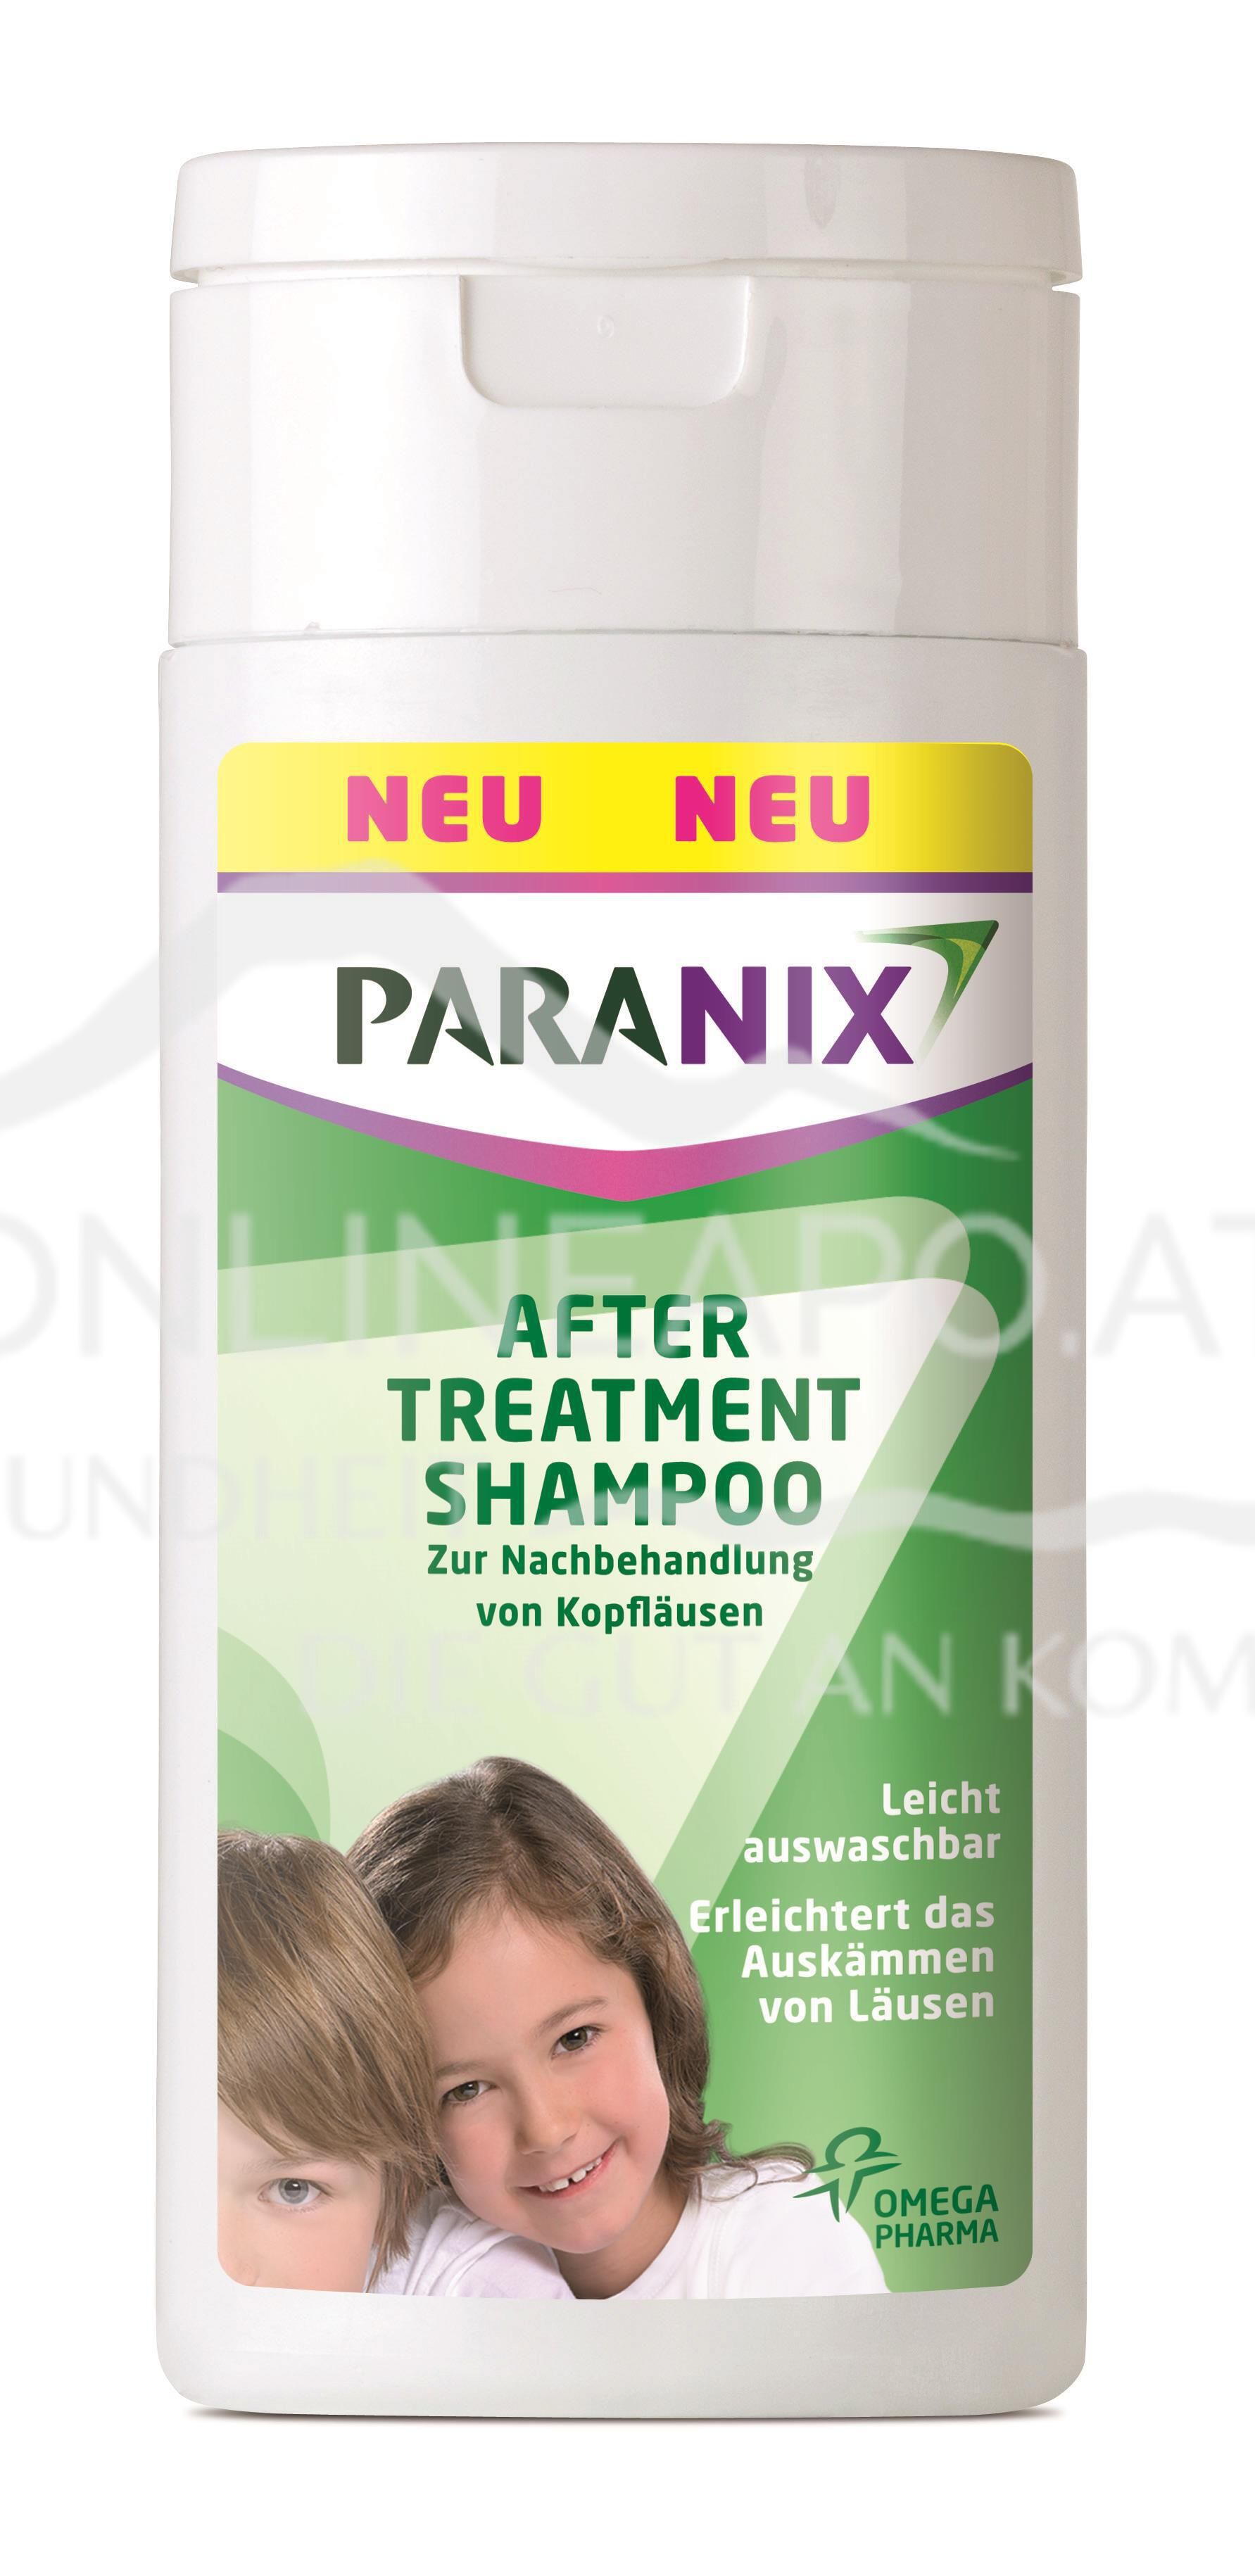 Paranix After Treatment Shampoo